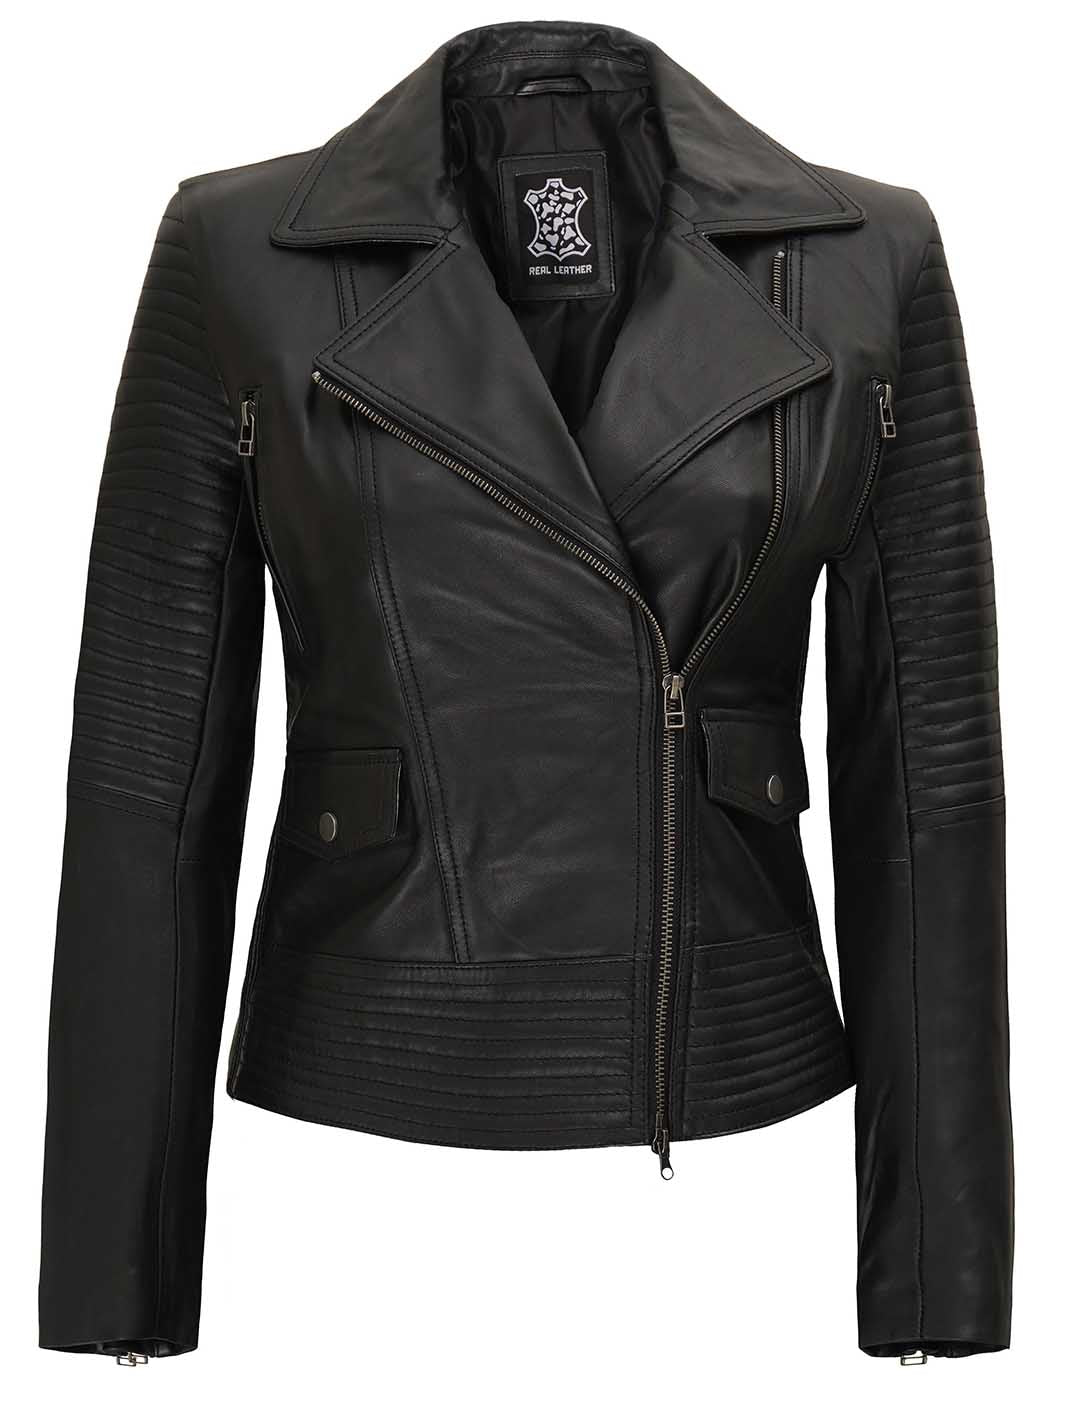 Gal gadot Asymmetrical Black Motorcycle Jacket Womens